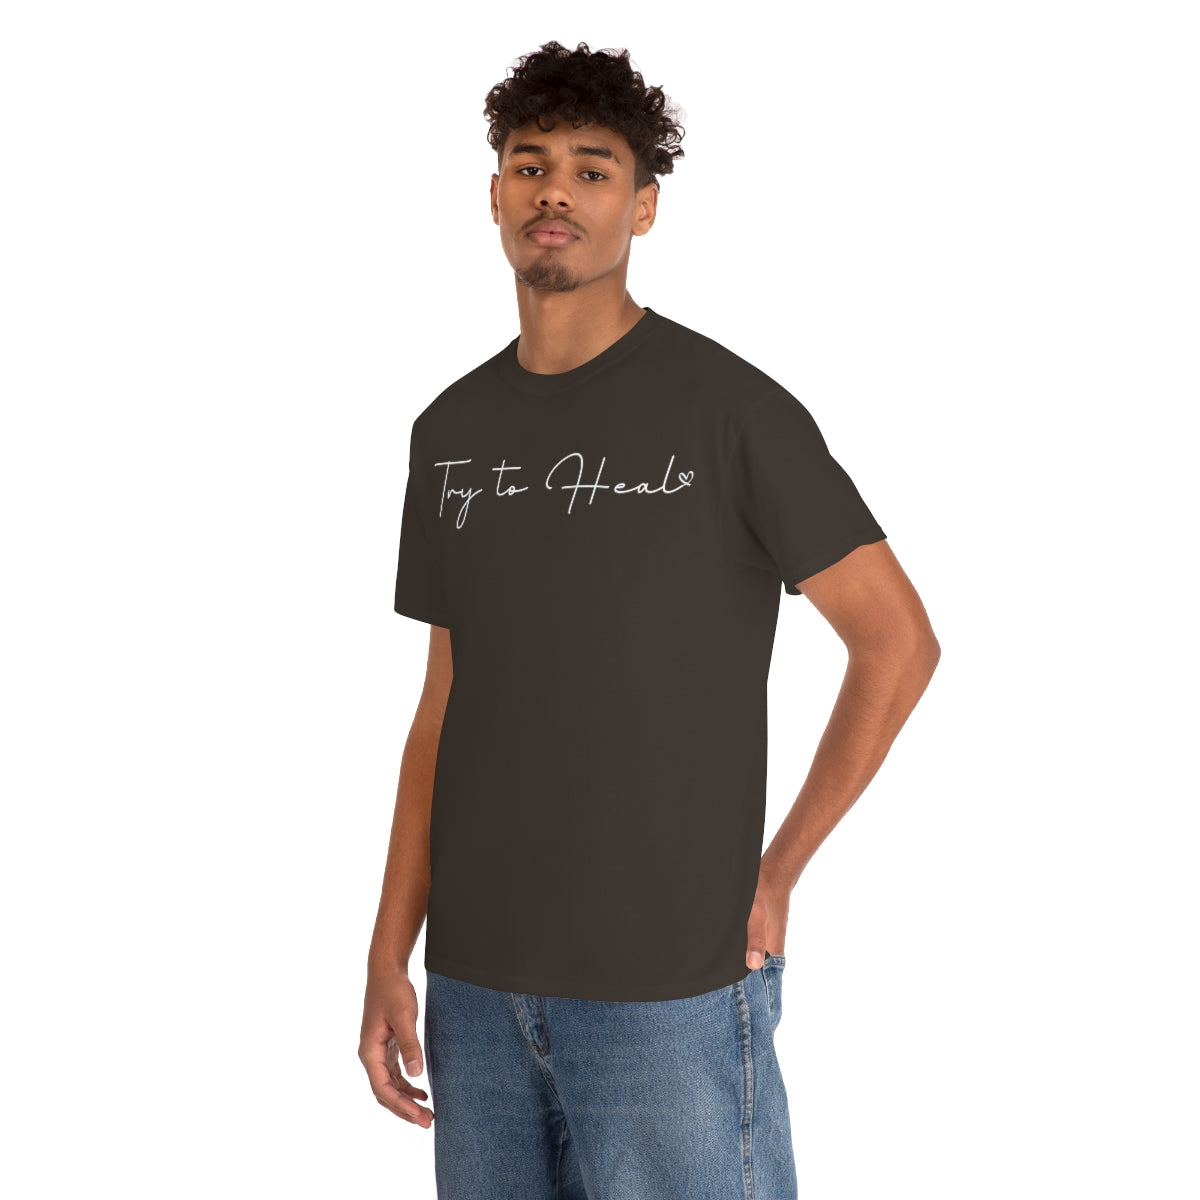 Try to Heal Signature Brand T-Shirt Trauma Survivor T-shirt Graphic 100% Cotton T-shirt- Trauma Recovery, Mental Health T-shirt, Self-Care Gift T-shirt, Black Graphic Tee